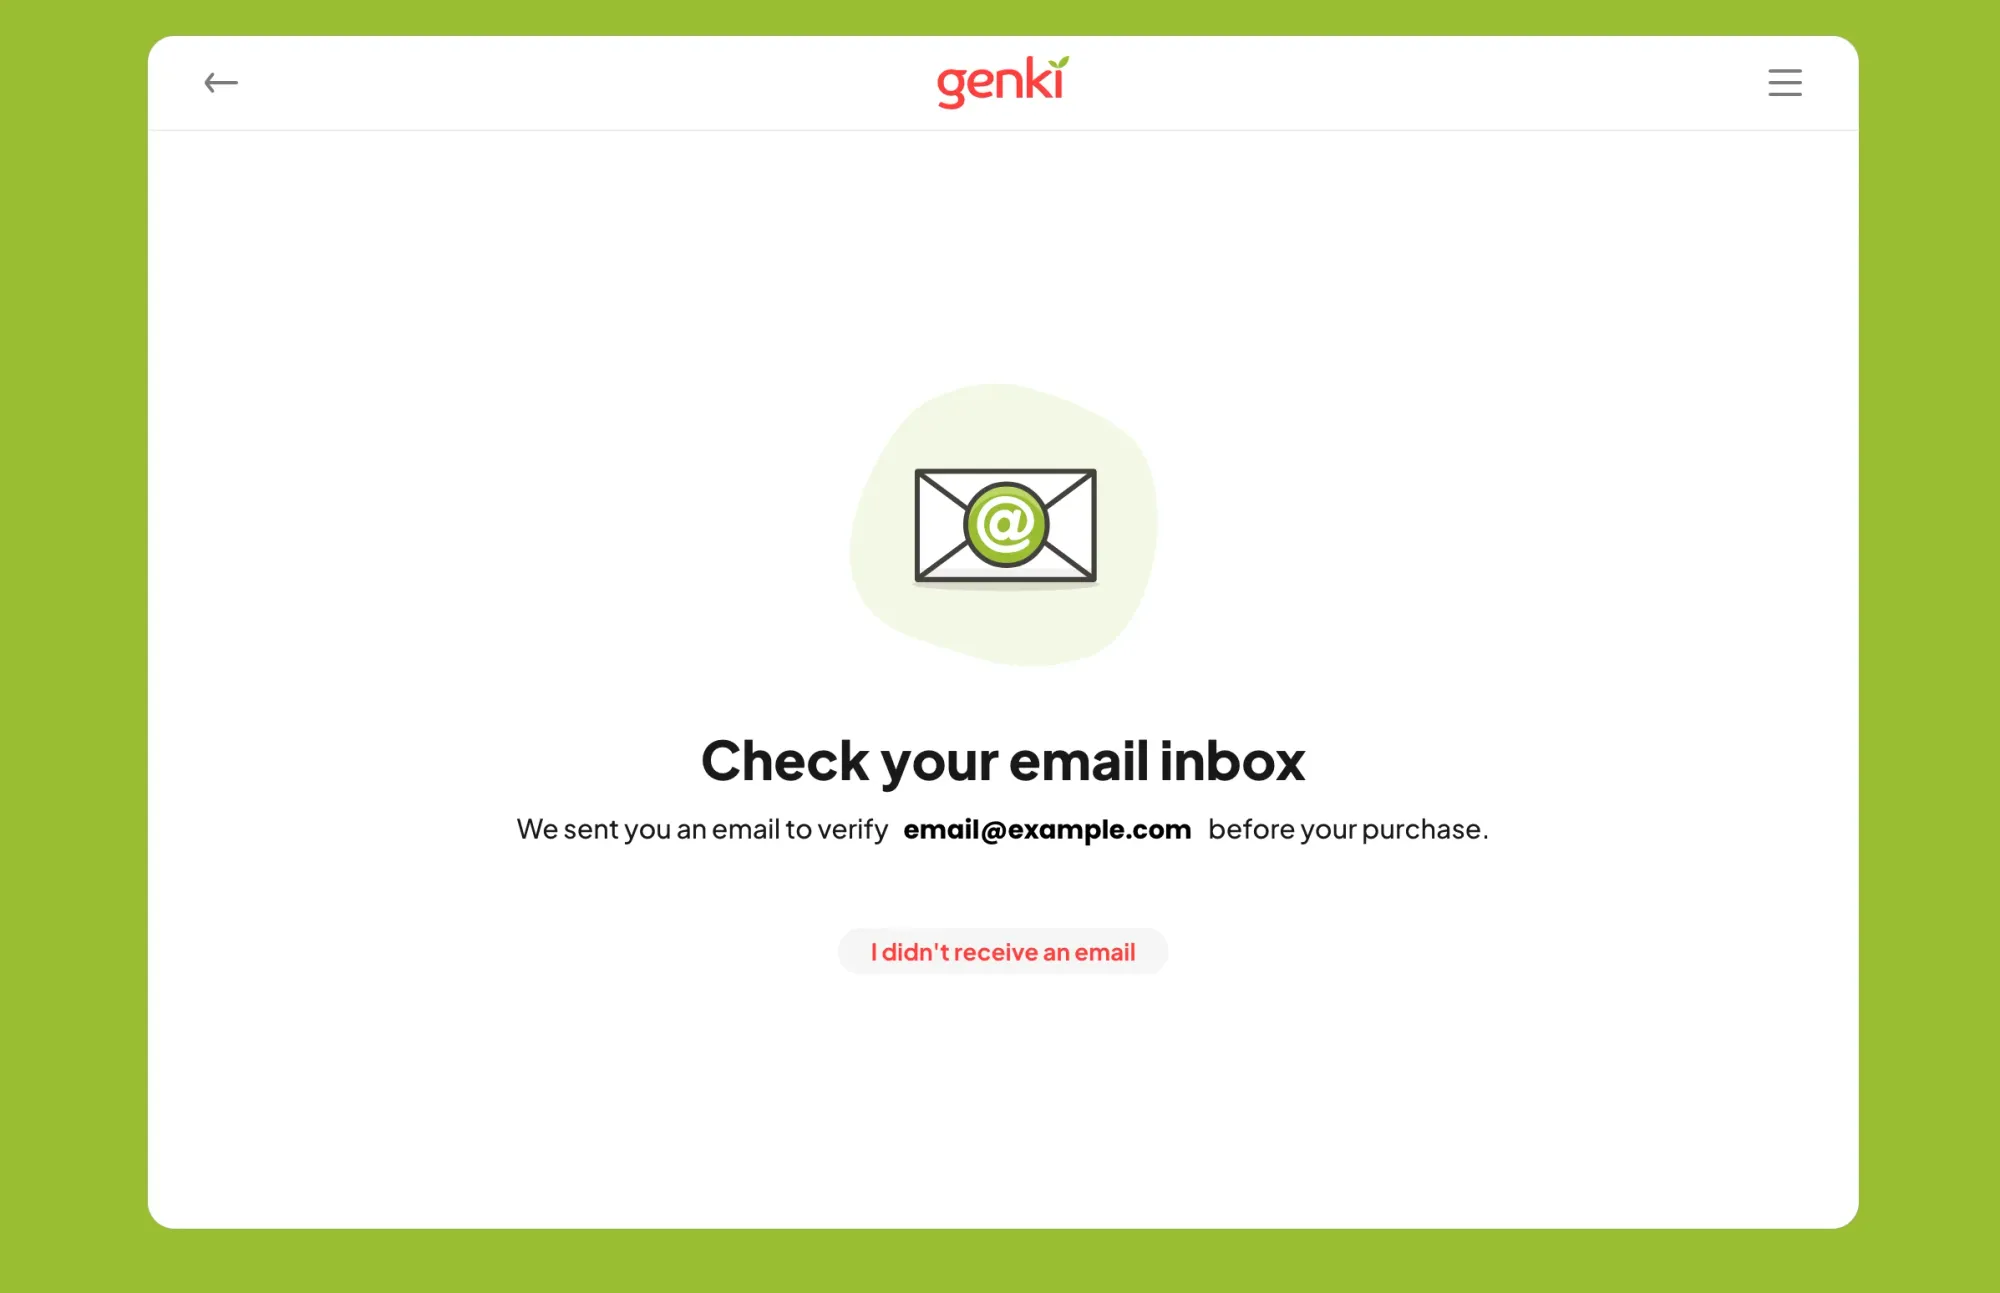 Genki quote step 7: verify email